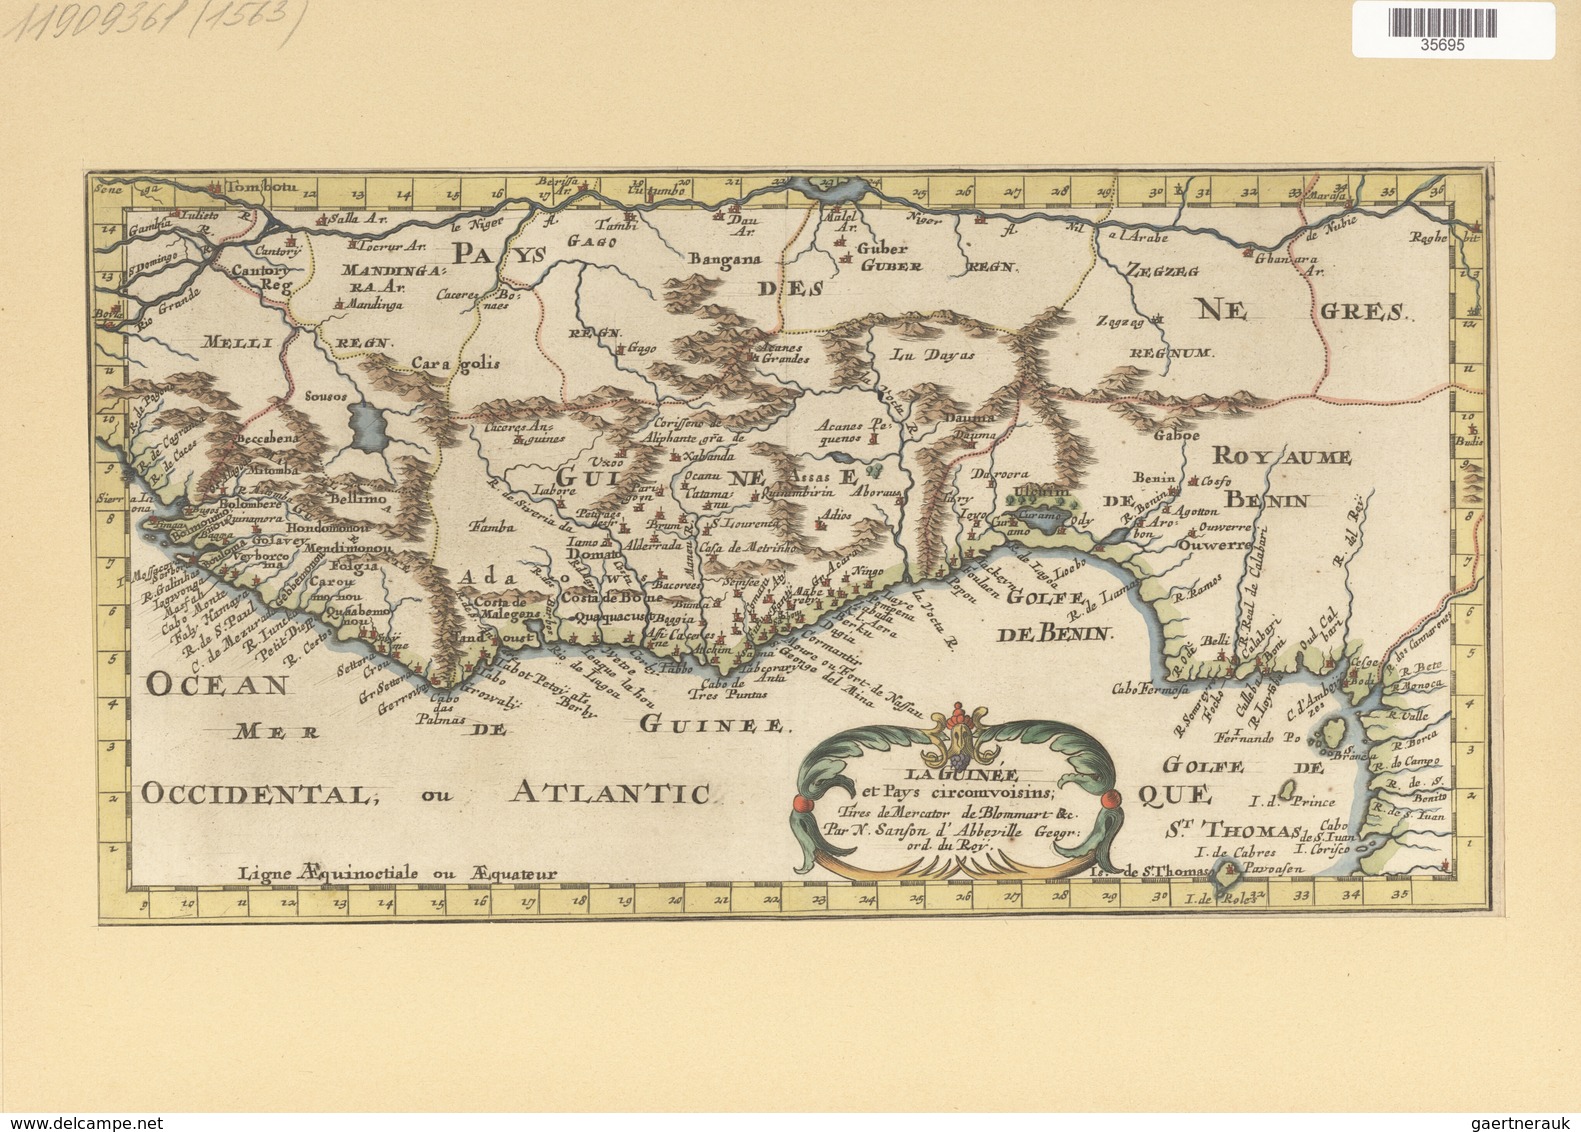 Landkarten Und Stiche: 1699. Map Of The Coast Of Guinee Including Gulf Of Benin, Part Of Nigeria, Et - Géographie